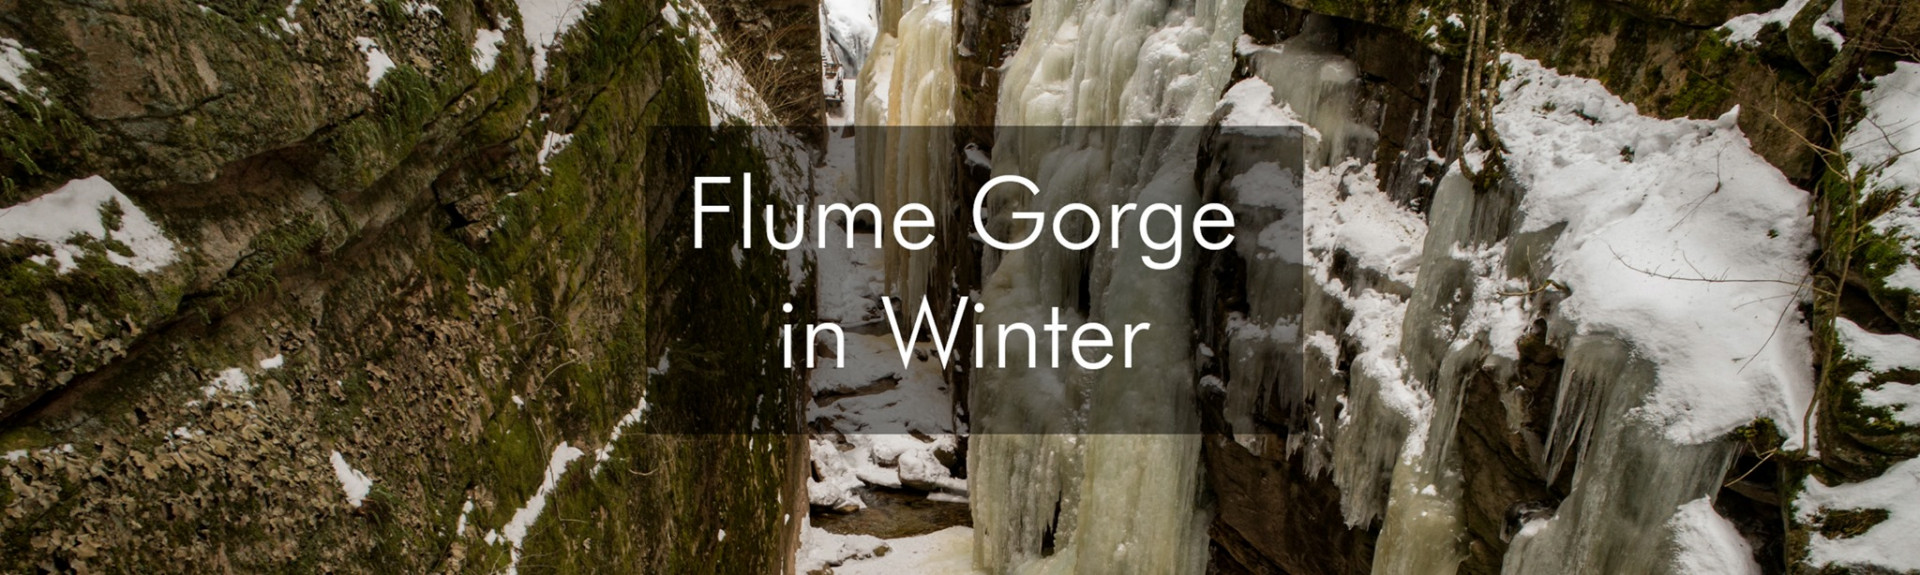 Flume Gorge in Winter